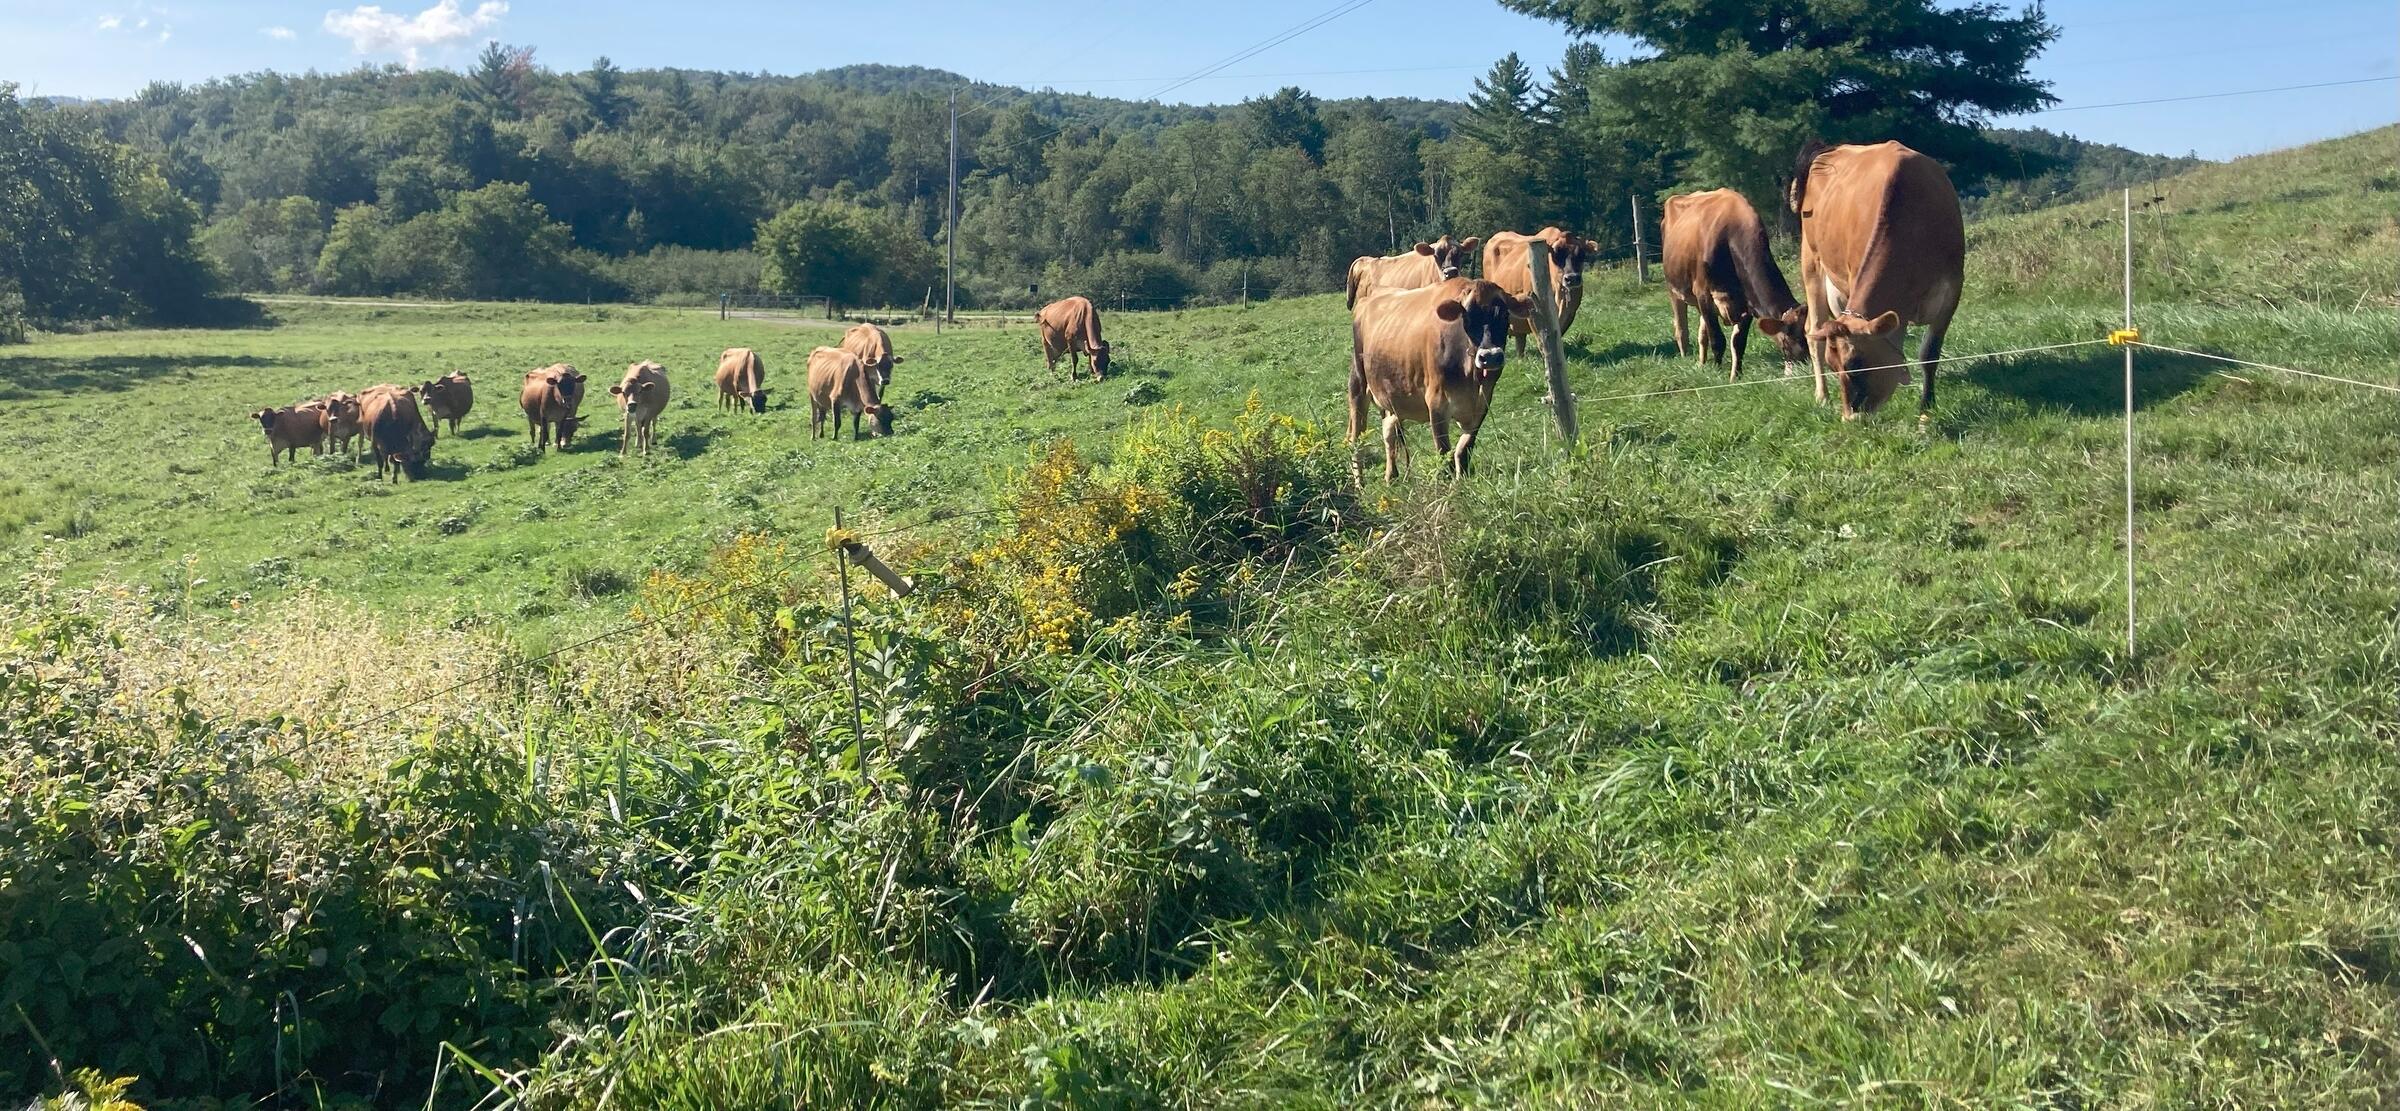 Jersey dairy cows graze in a grass field